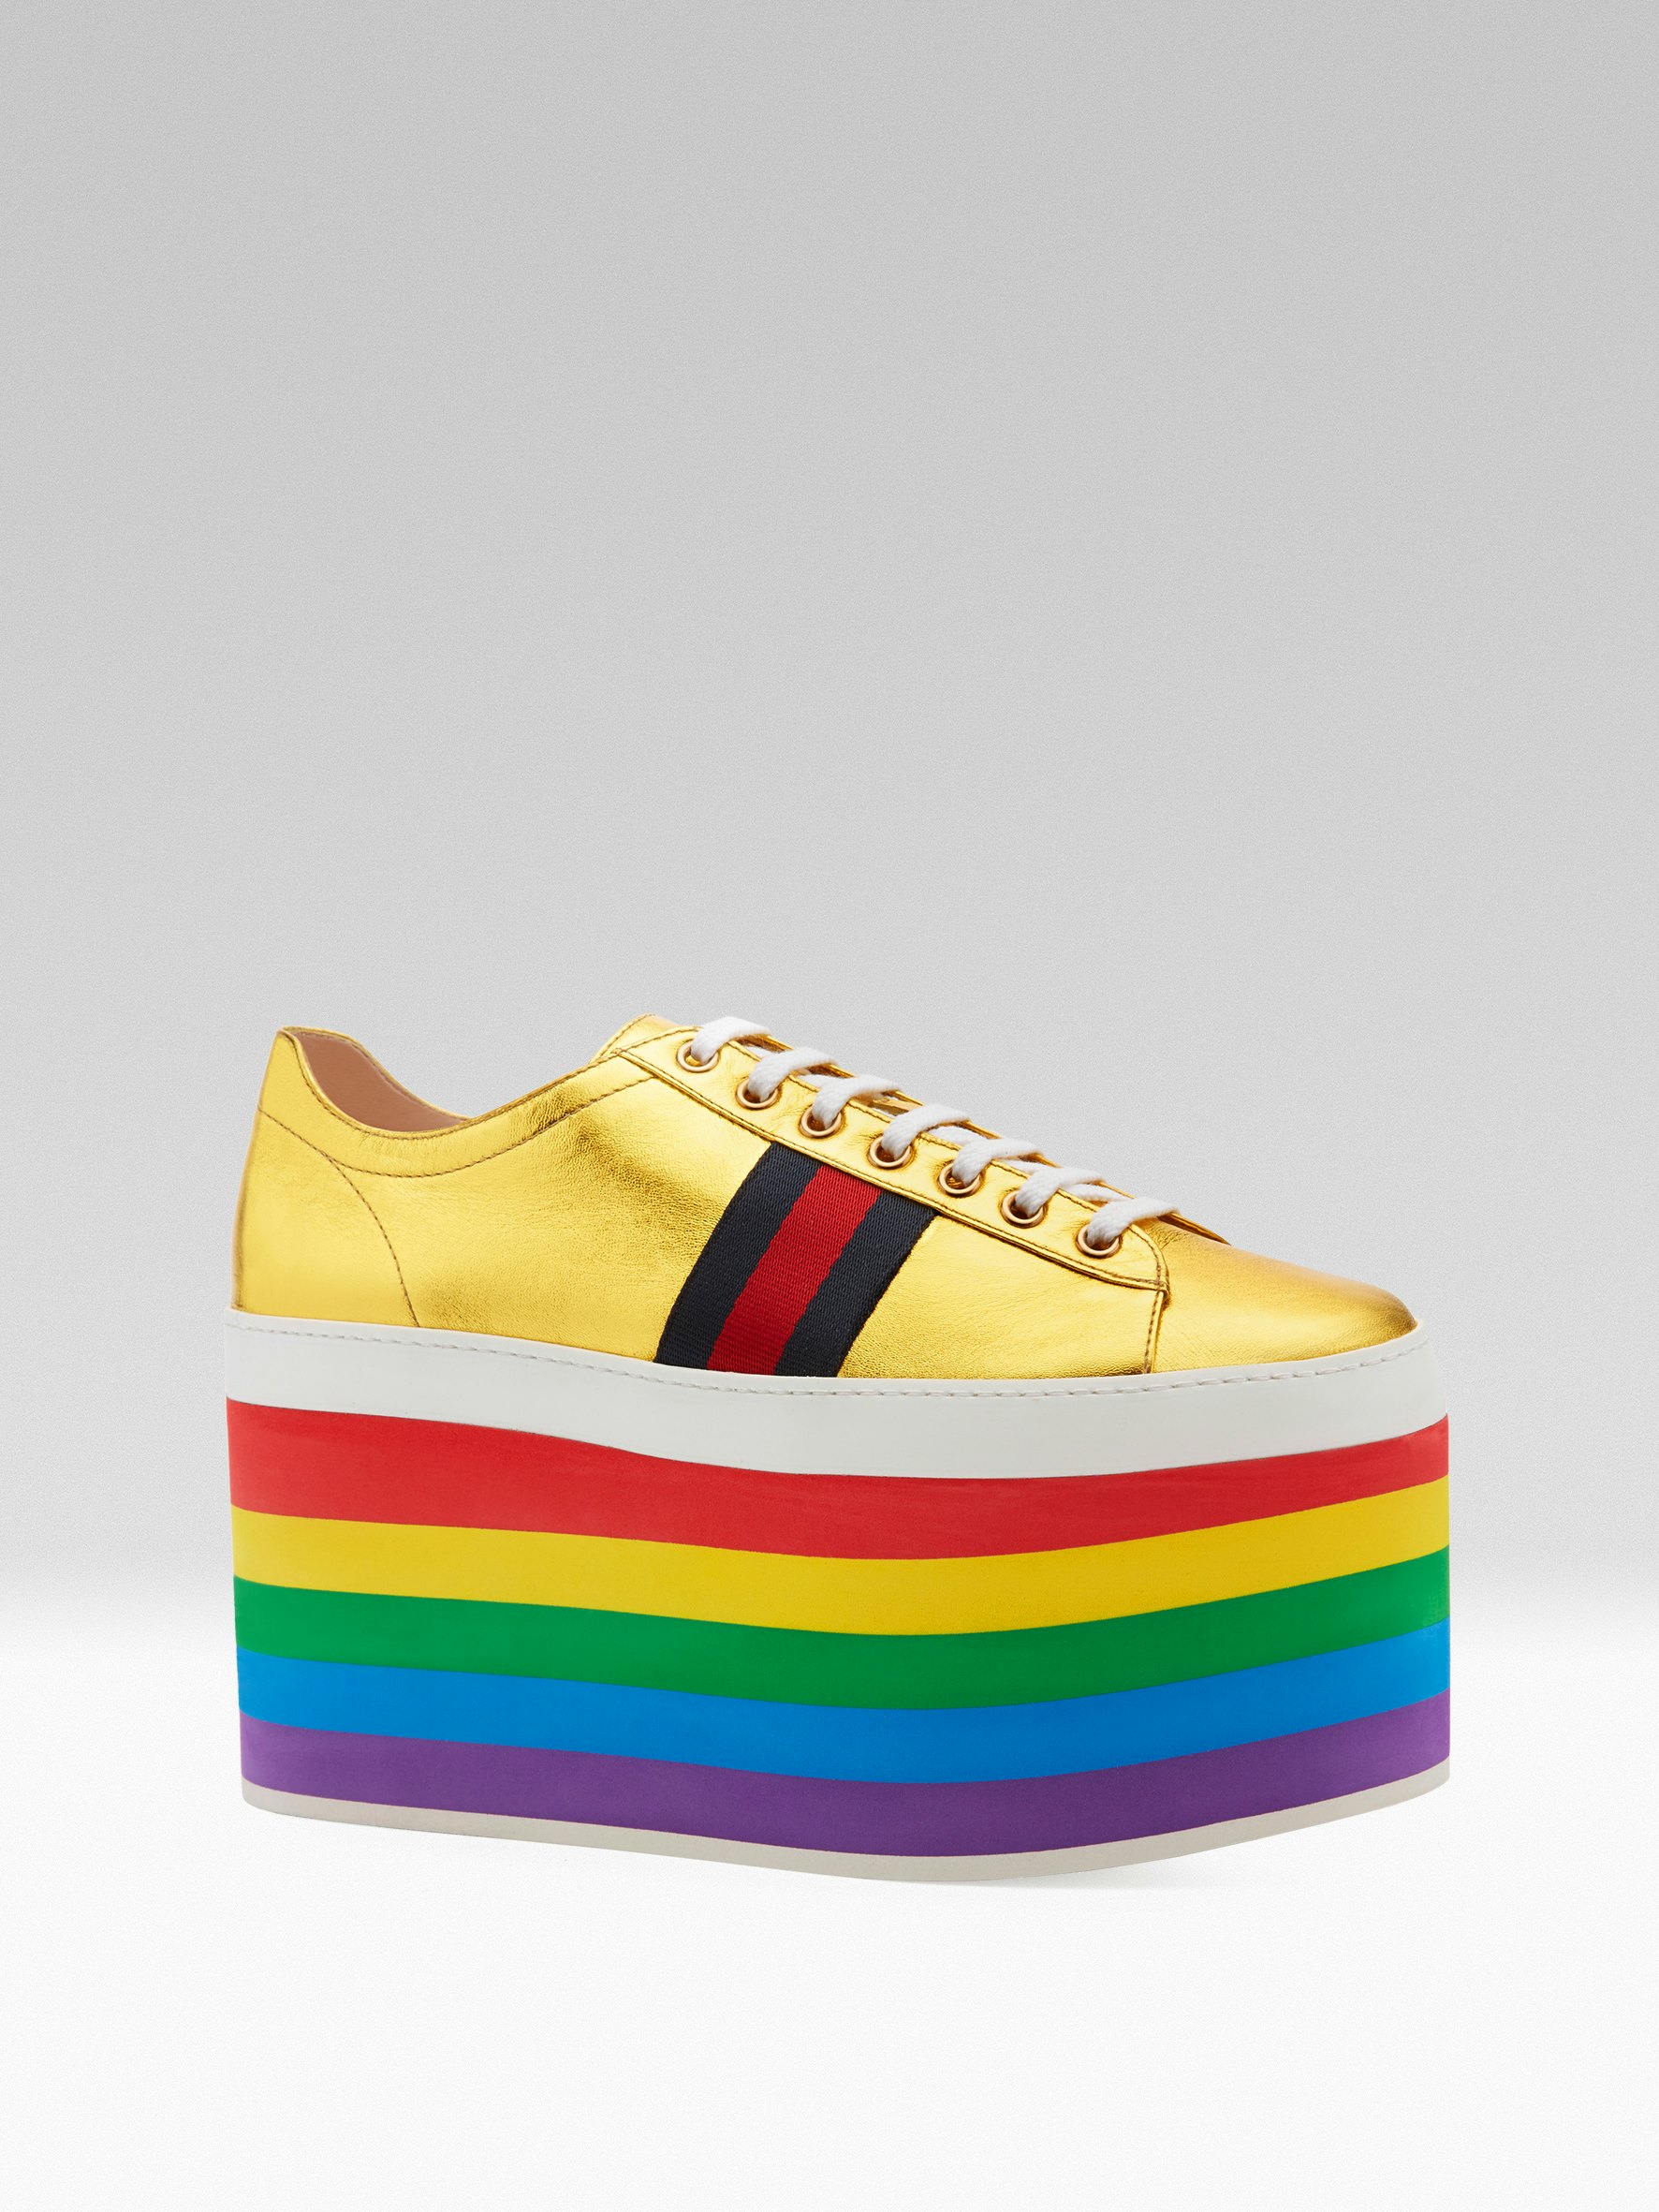 rainbow platform shoes forever 21